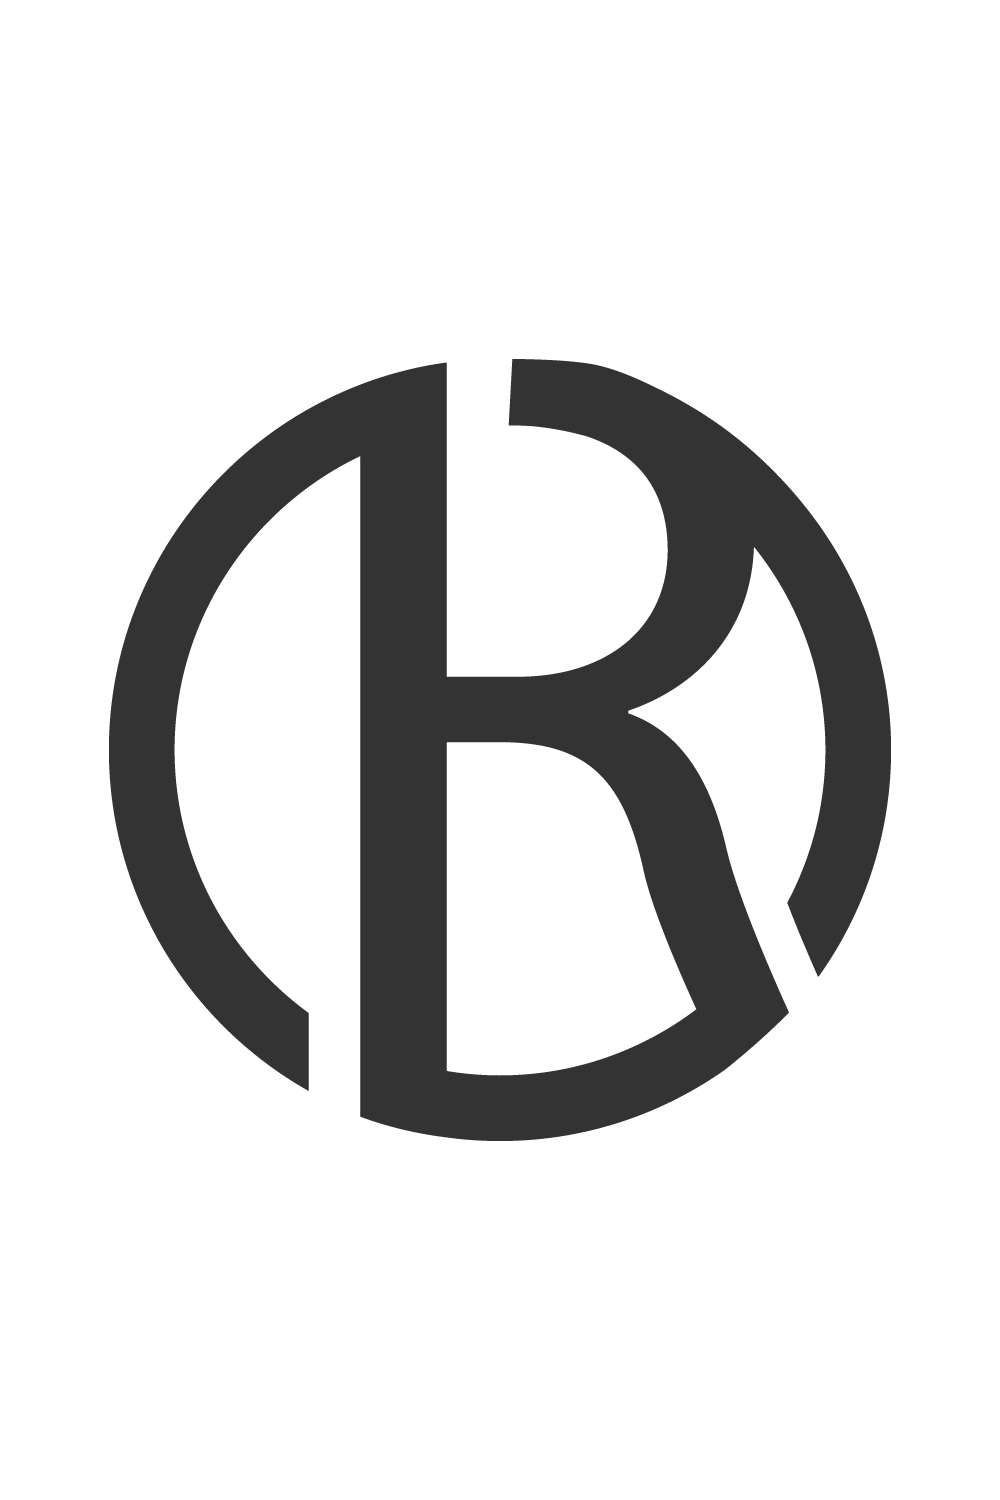 Professional OR letters logo vector images design R logo design circle icon black color R letter logo best identity pinterest preview image.